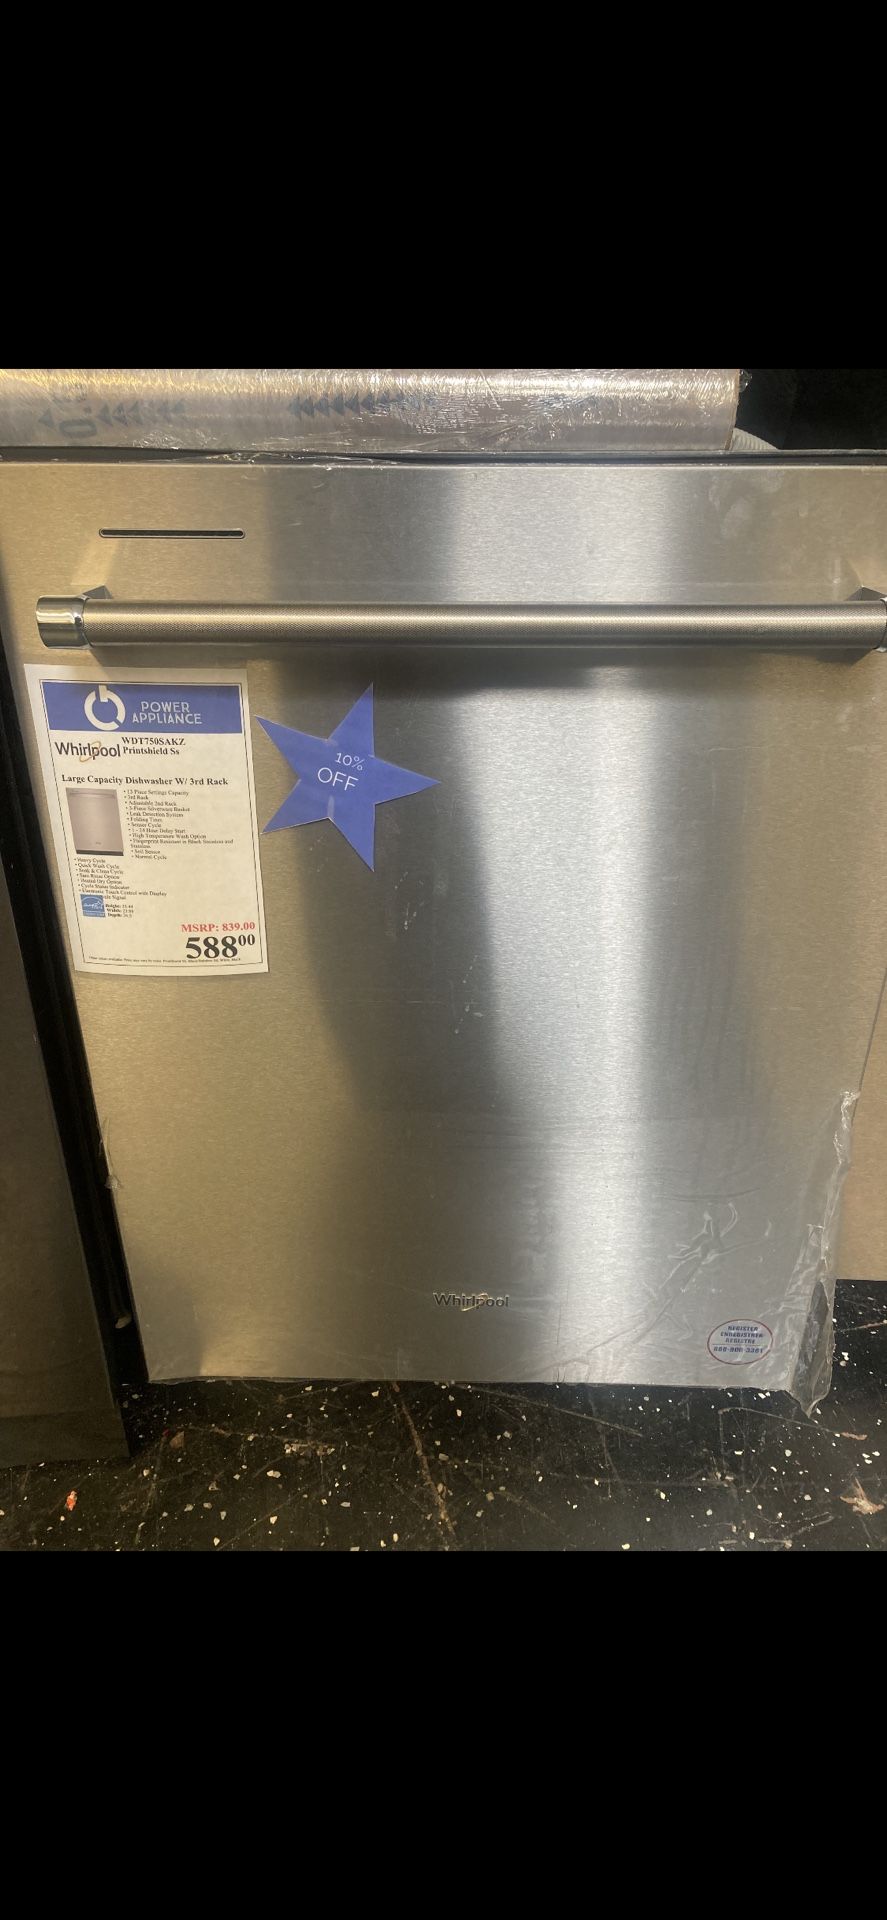 whirlpool dishwasher (warranty included)